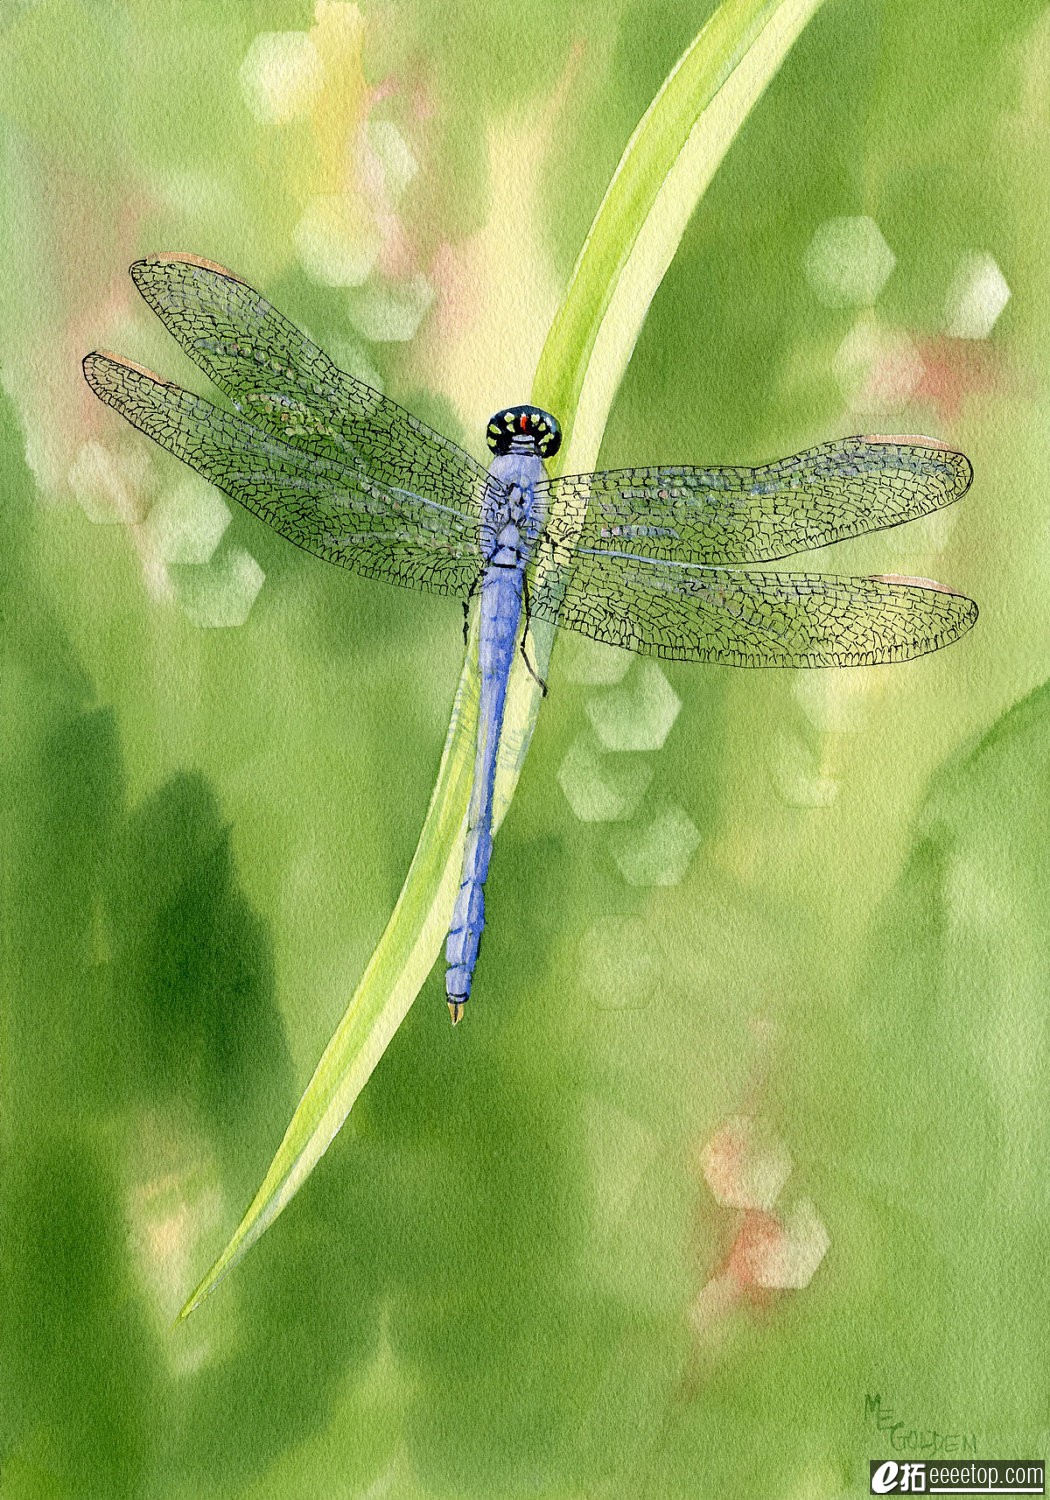 Blue Dragonfly giclee print.jpg